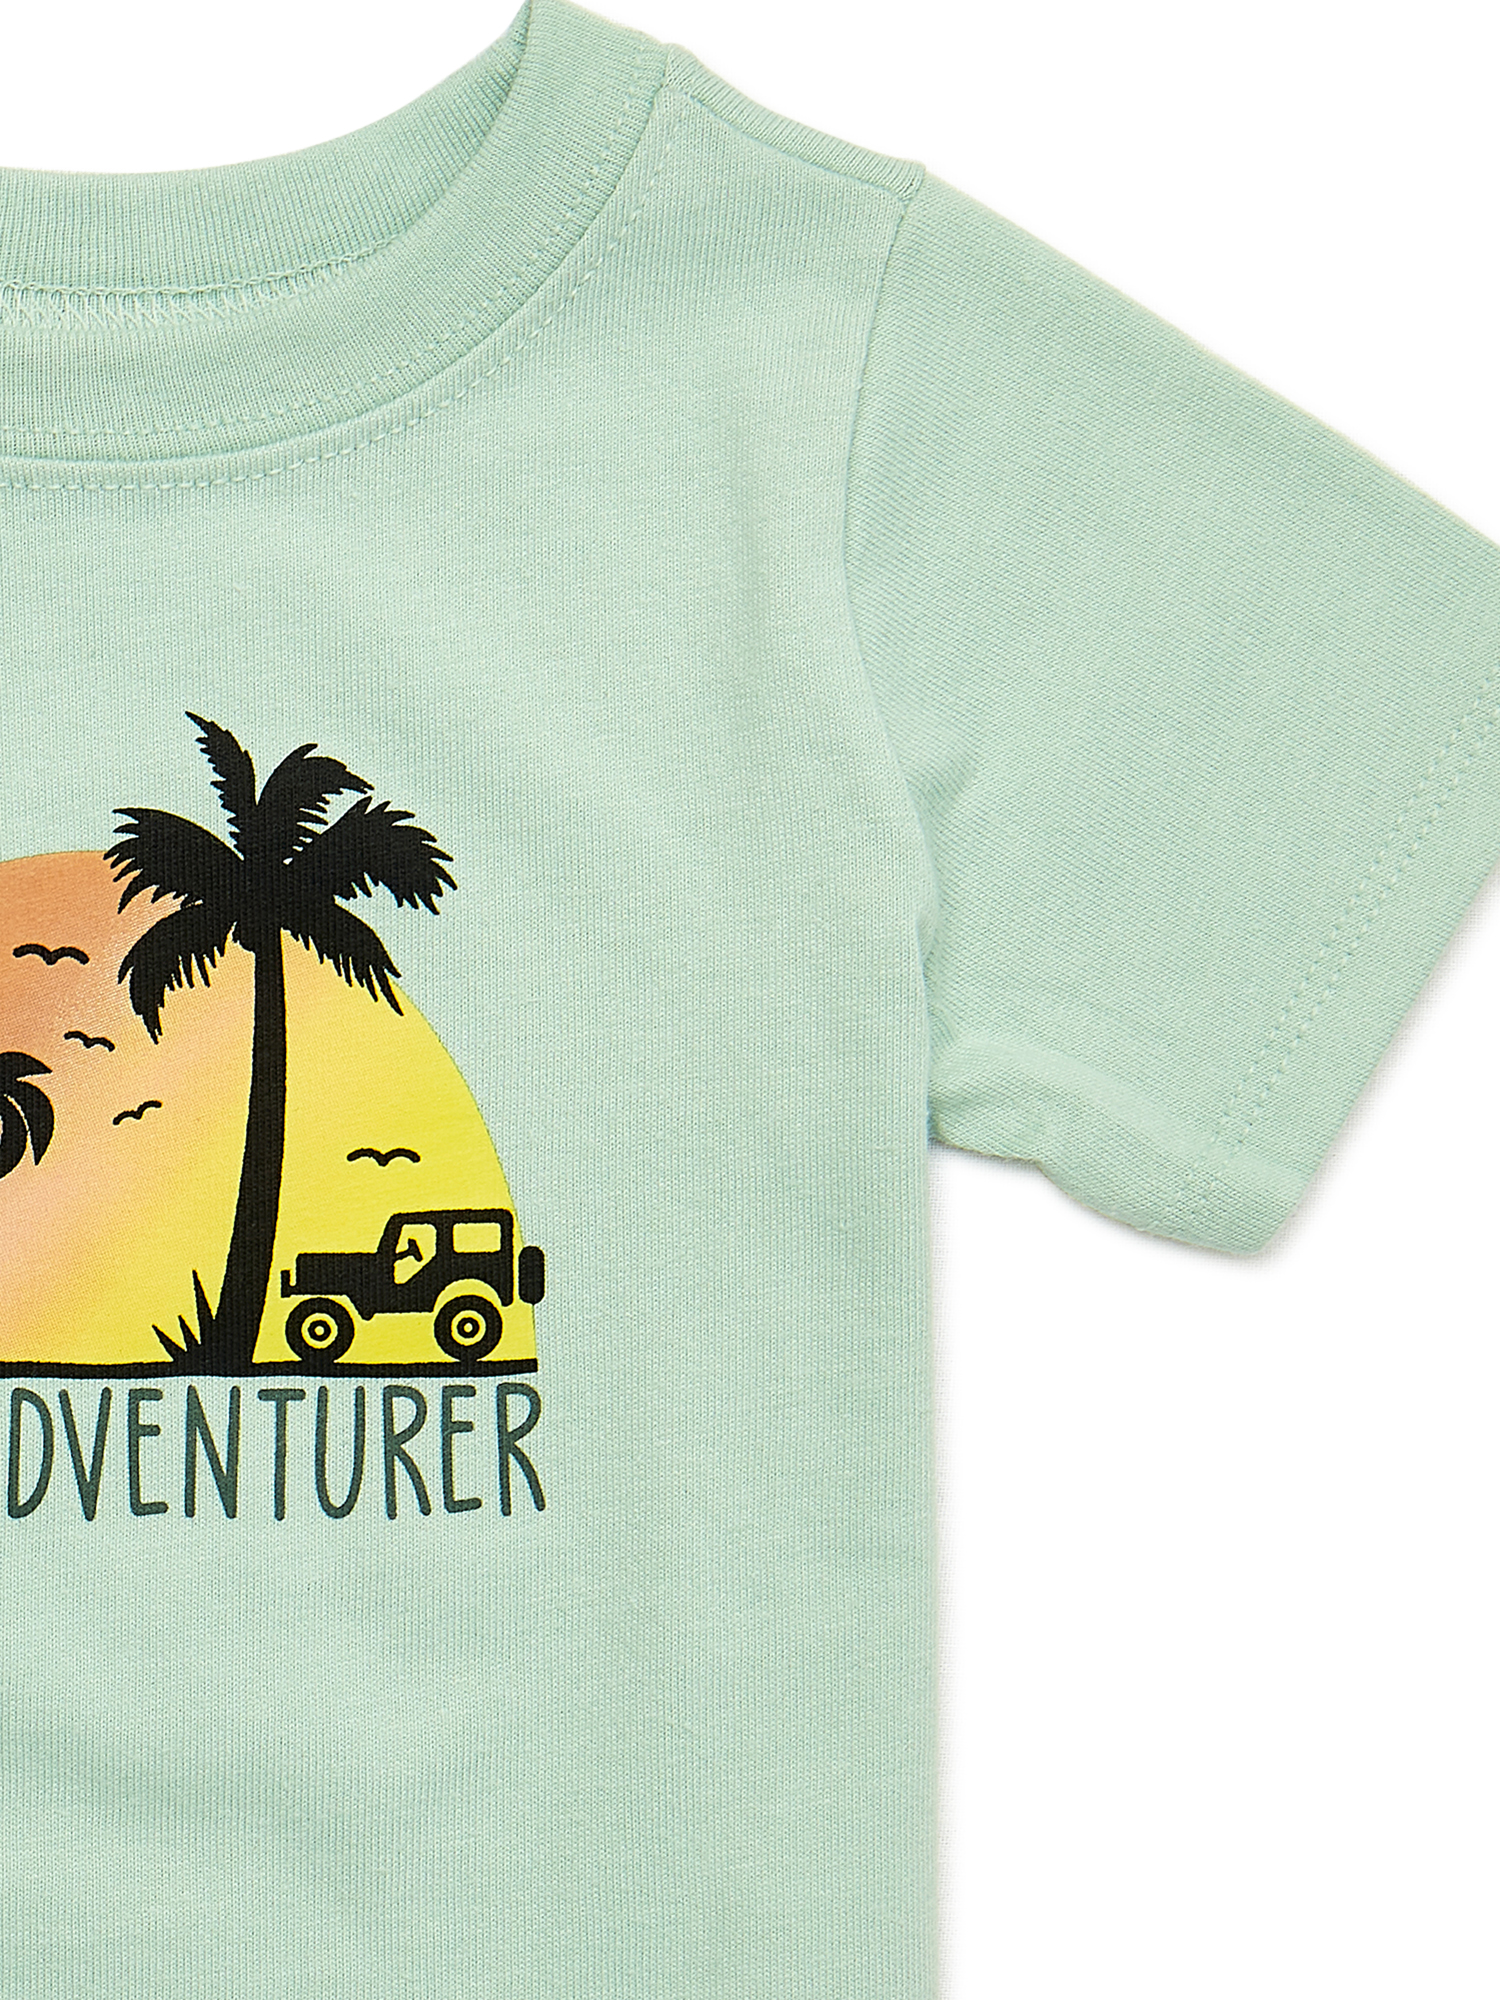 Garanimals Baby Boy Short Sleeve Graphic T-Shirt, Sizes 0-24 Months - image 2 of 4